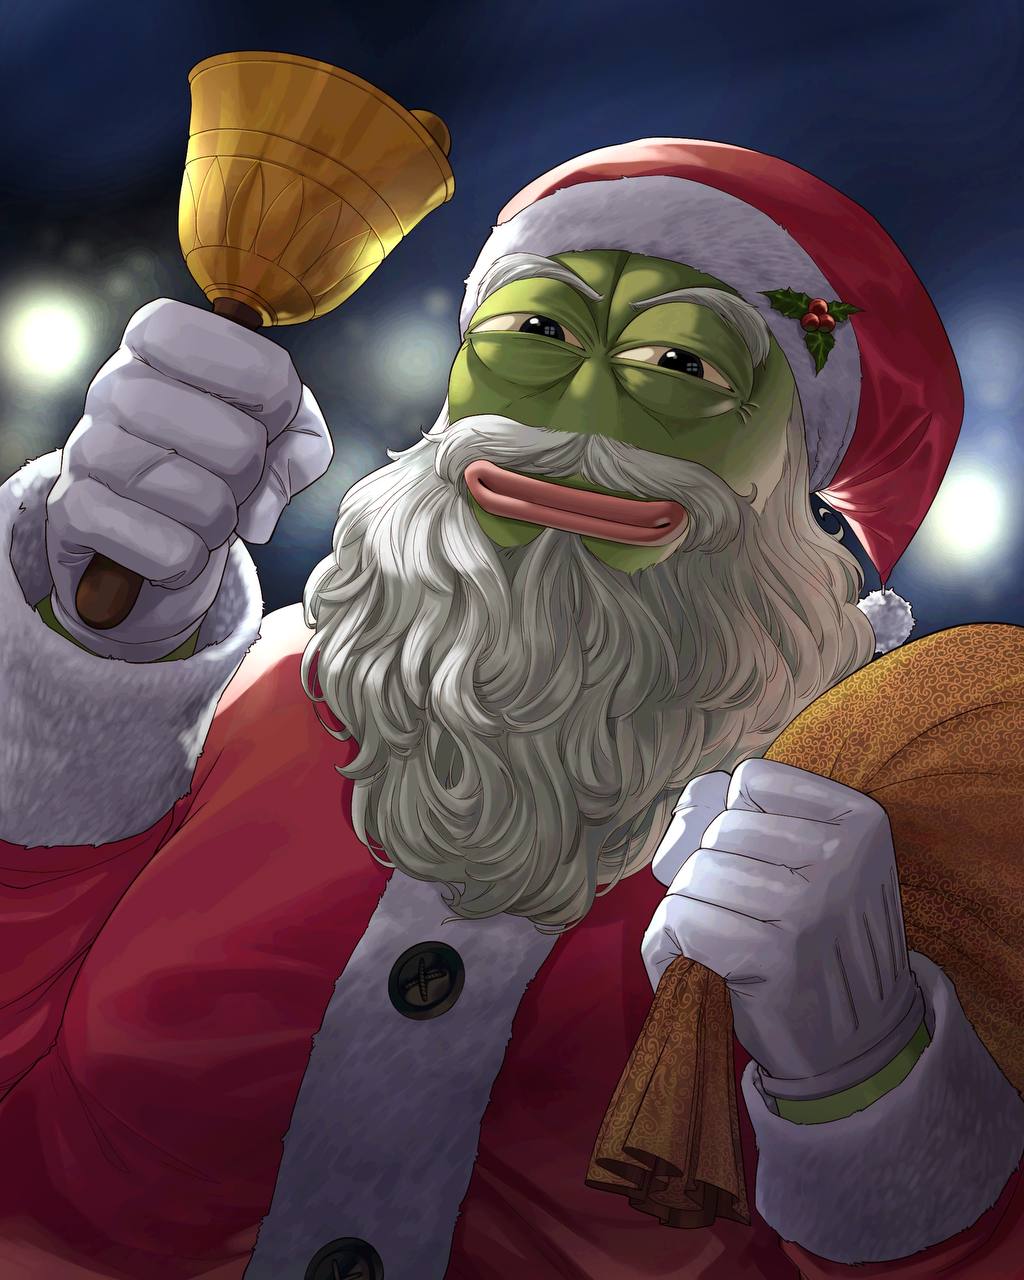 A Merry Pepe Christmas